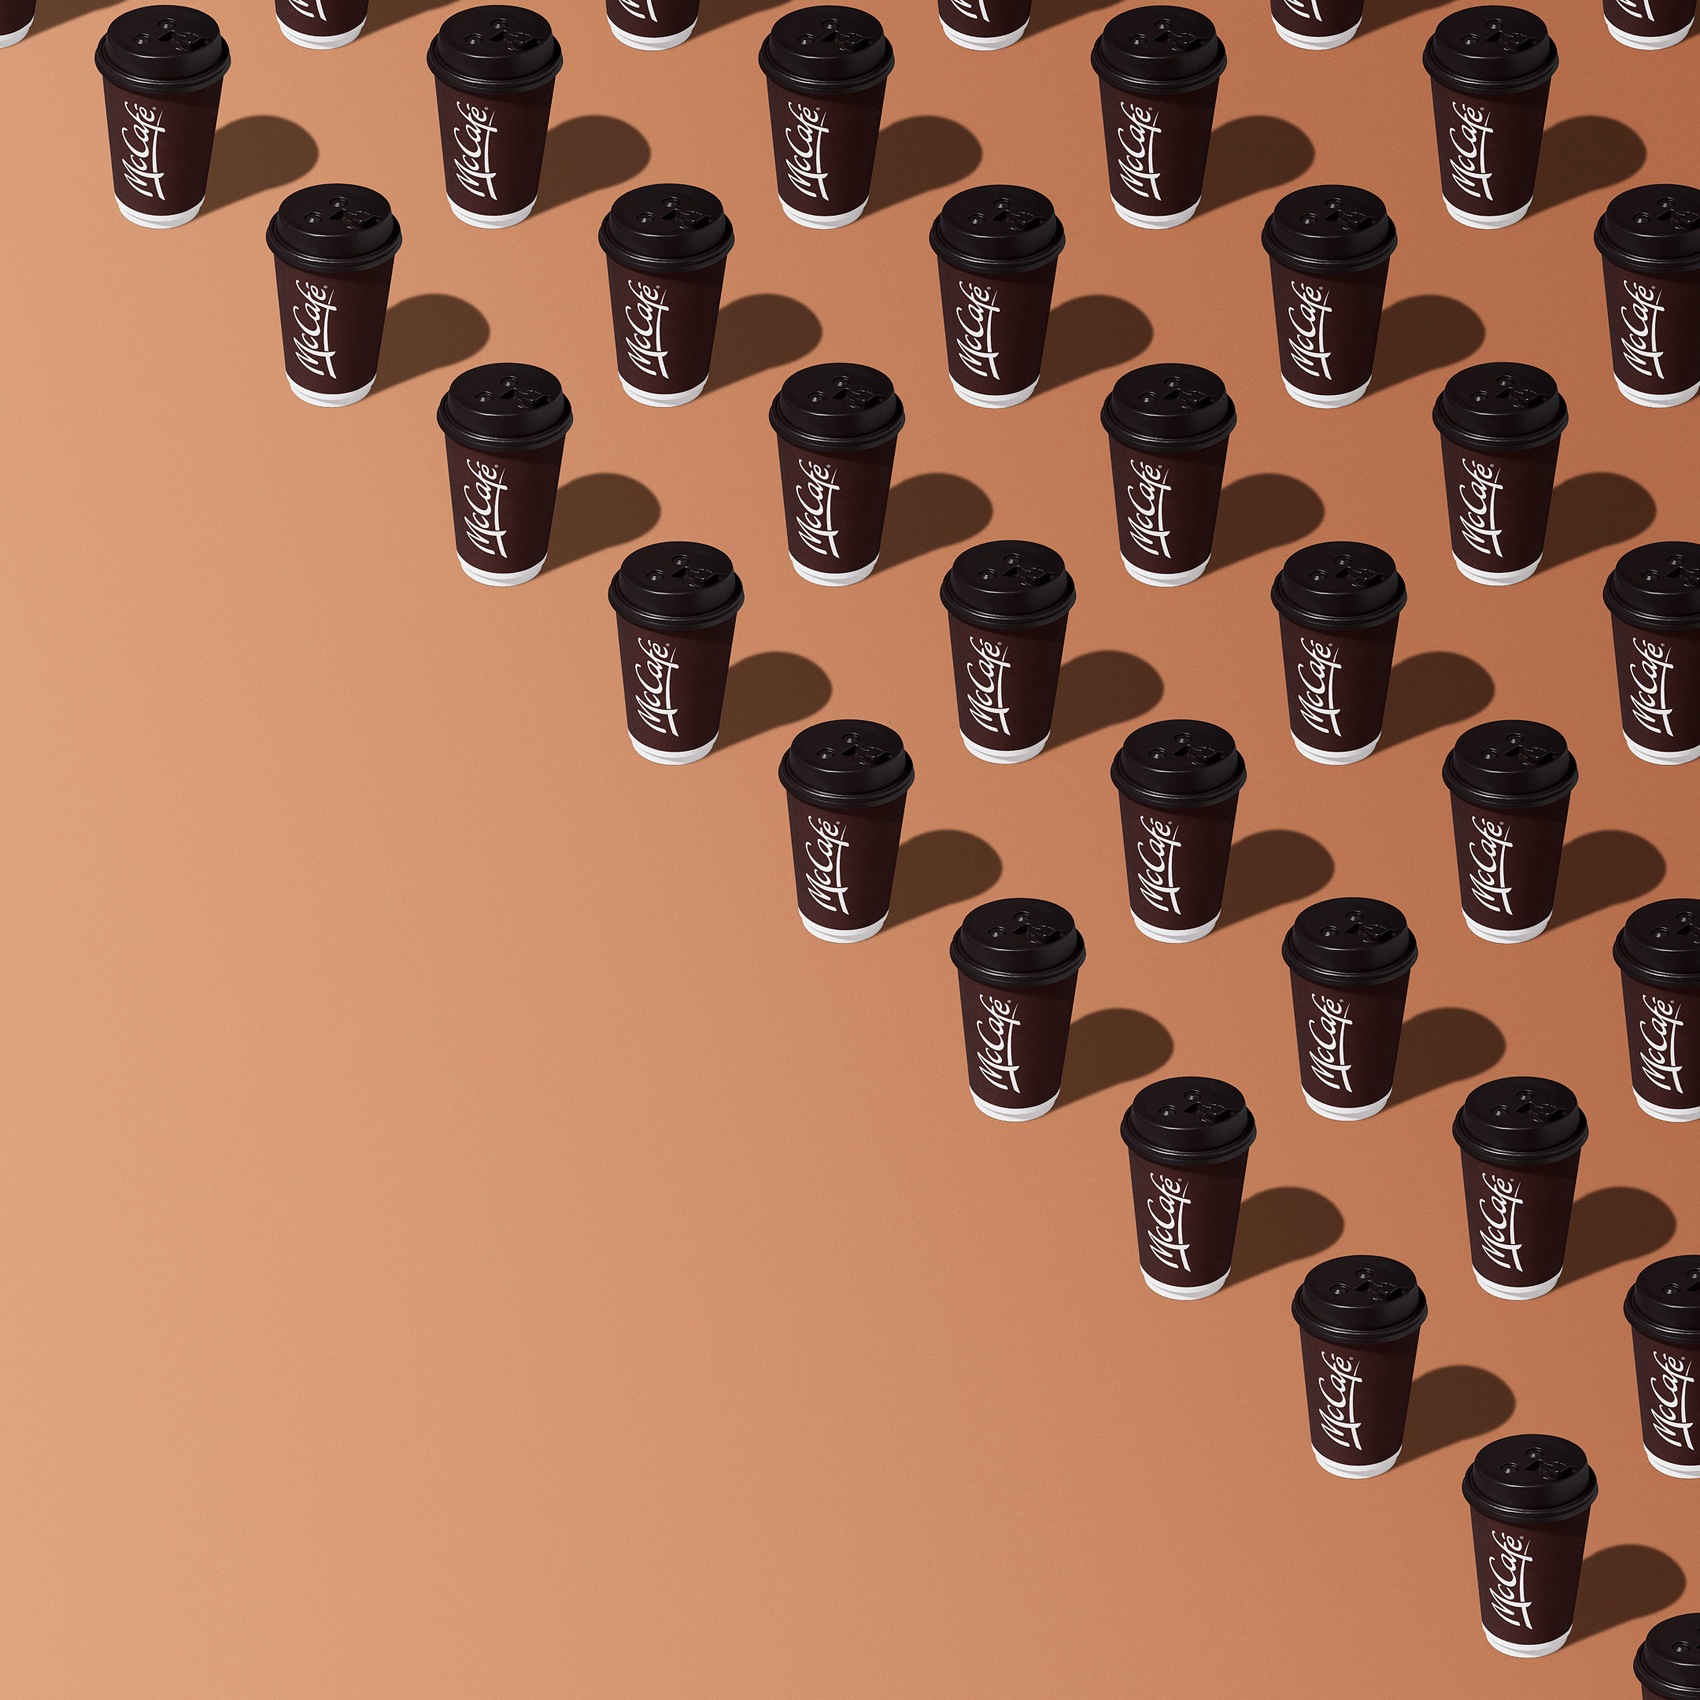 A Half Full Image Of Coffee Cups - McCafe / McDonald